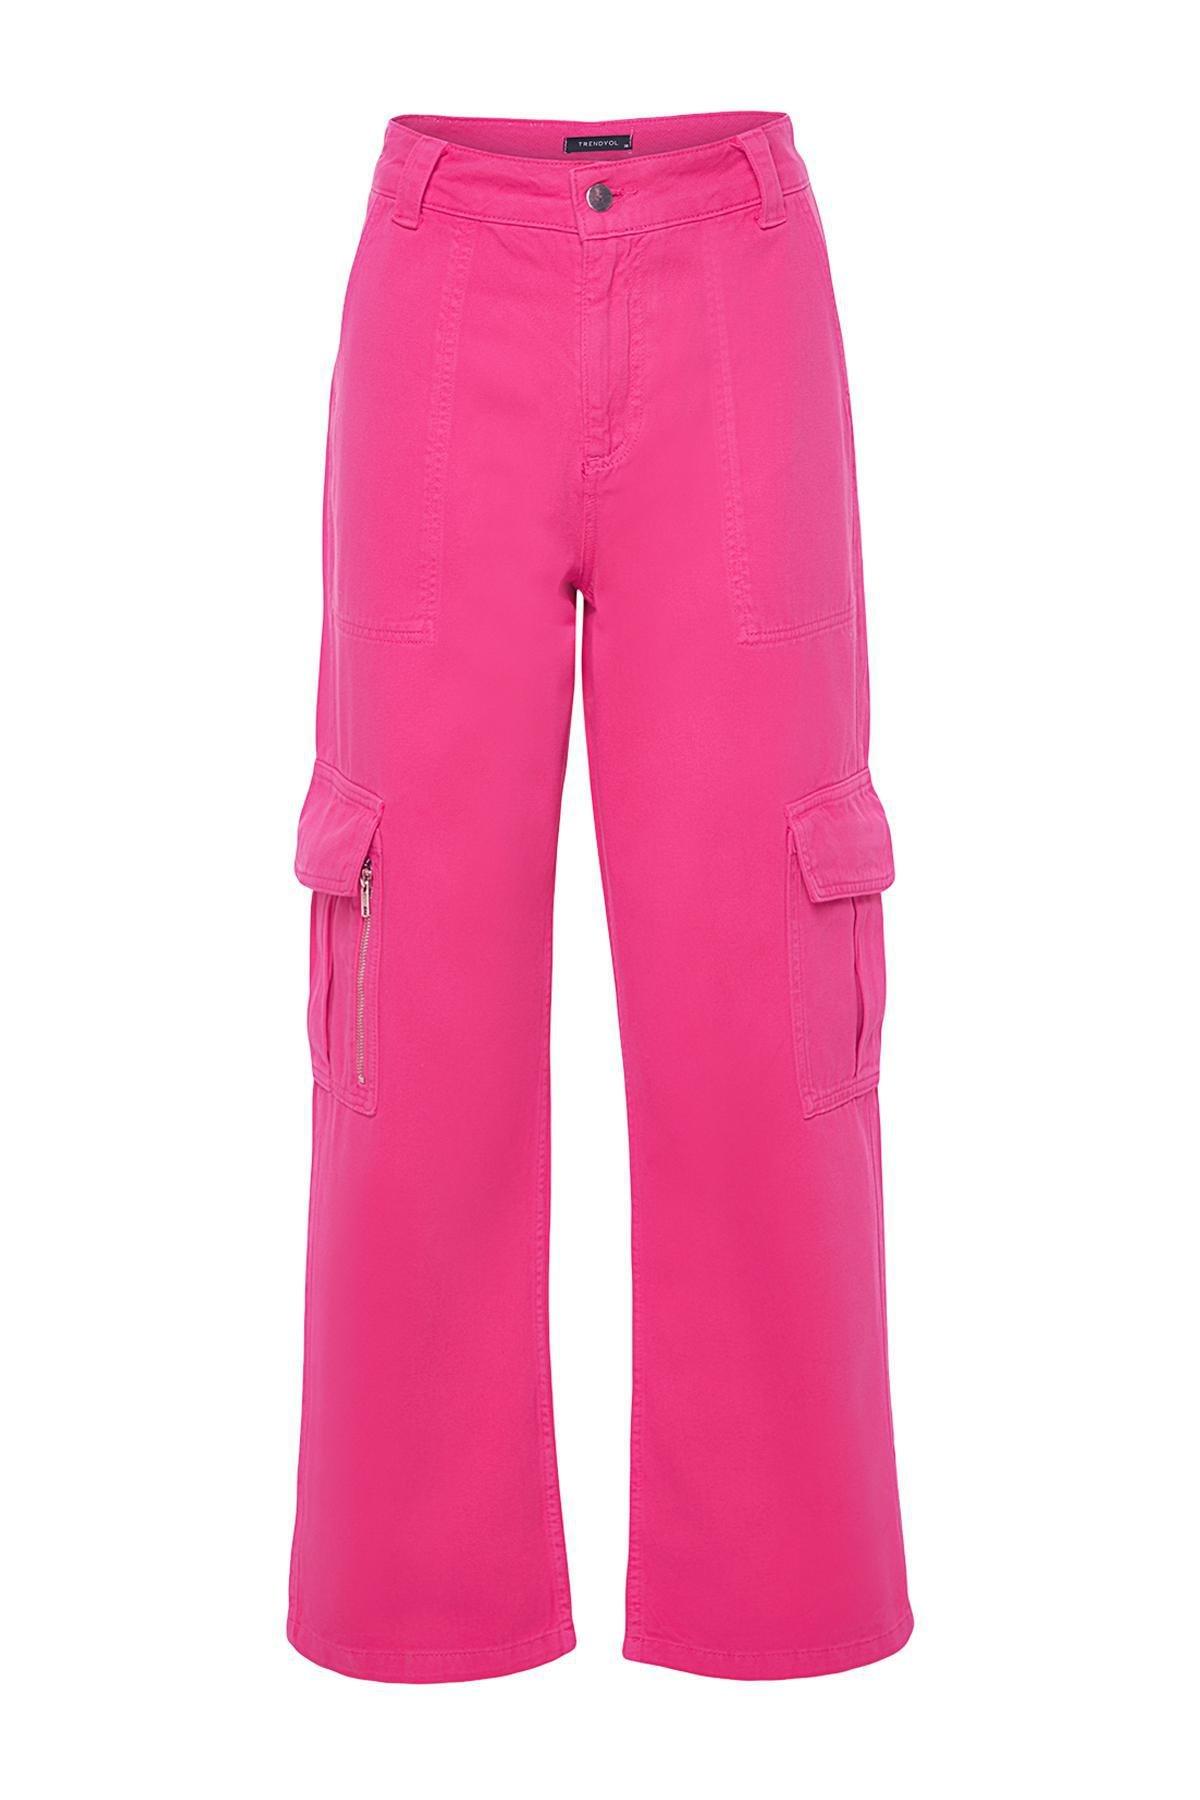 Trendyol - Pink Detailed High Waist Jeans